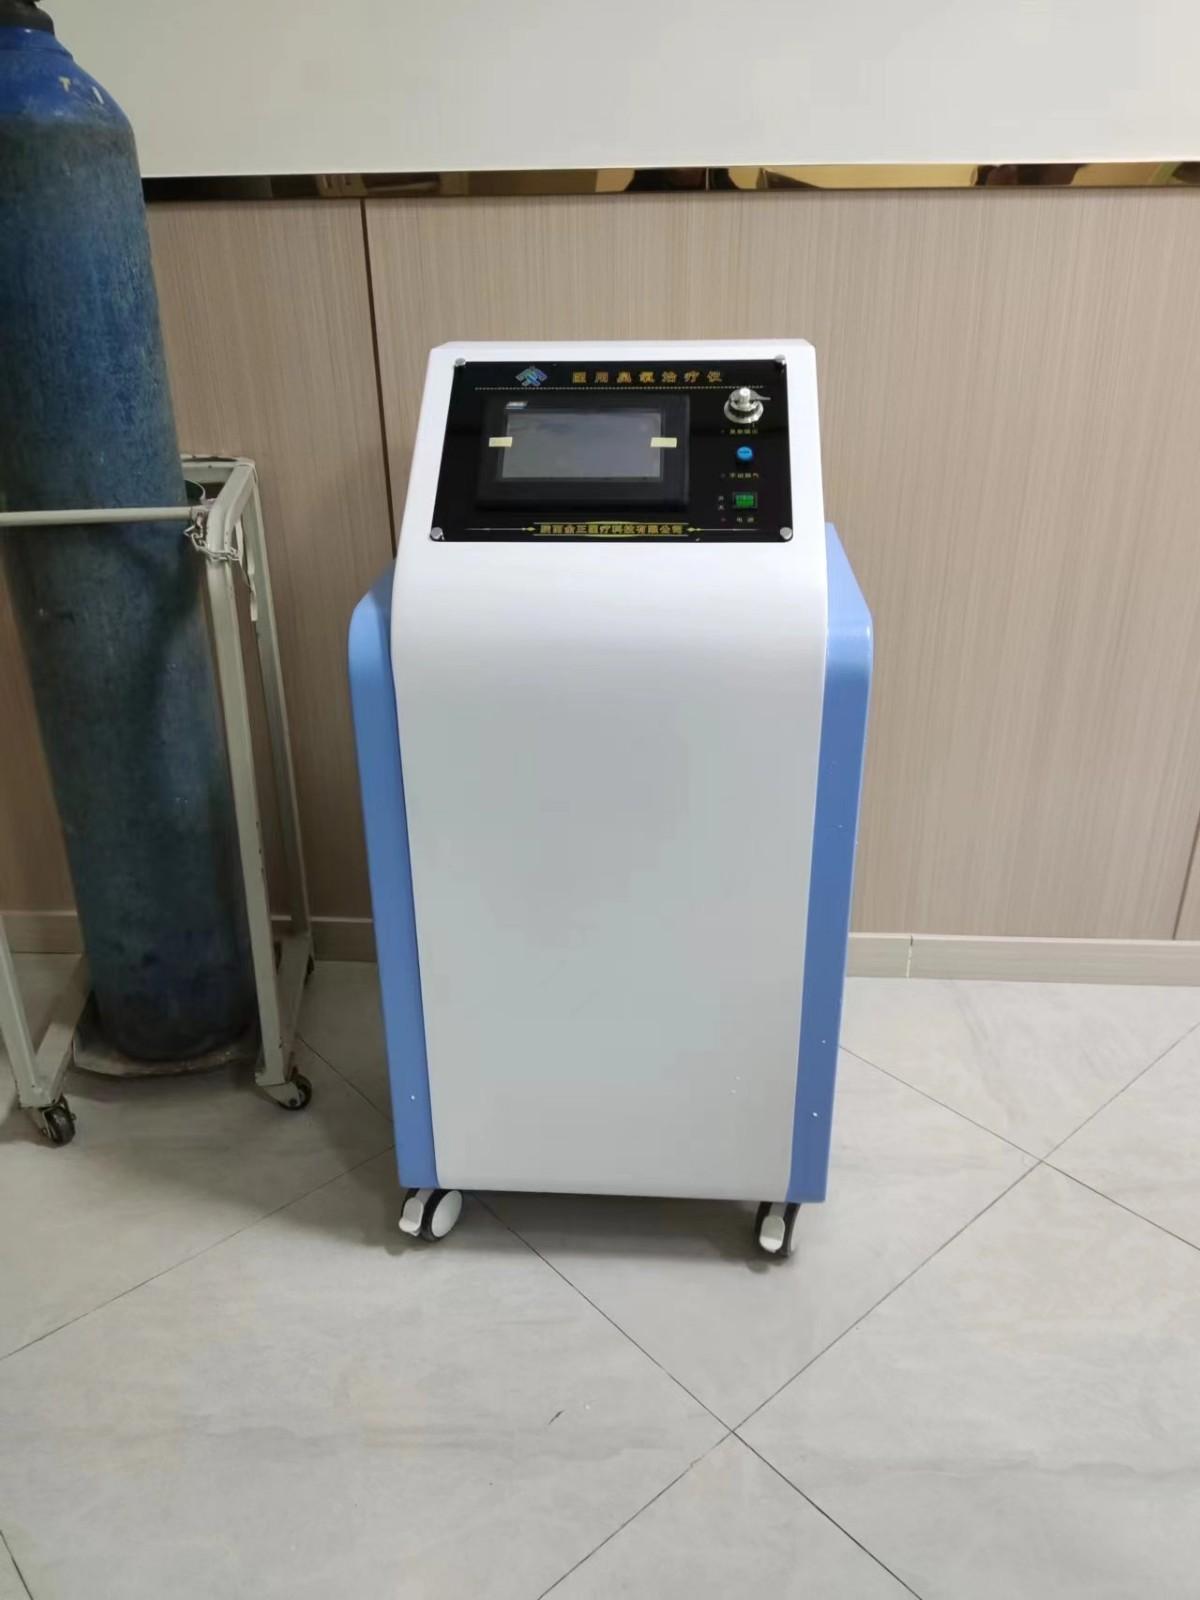 JZ-3000柜式臭氧治疗仪  三类中标产品